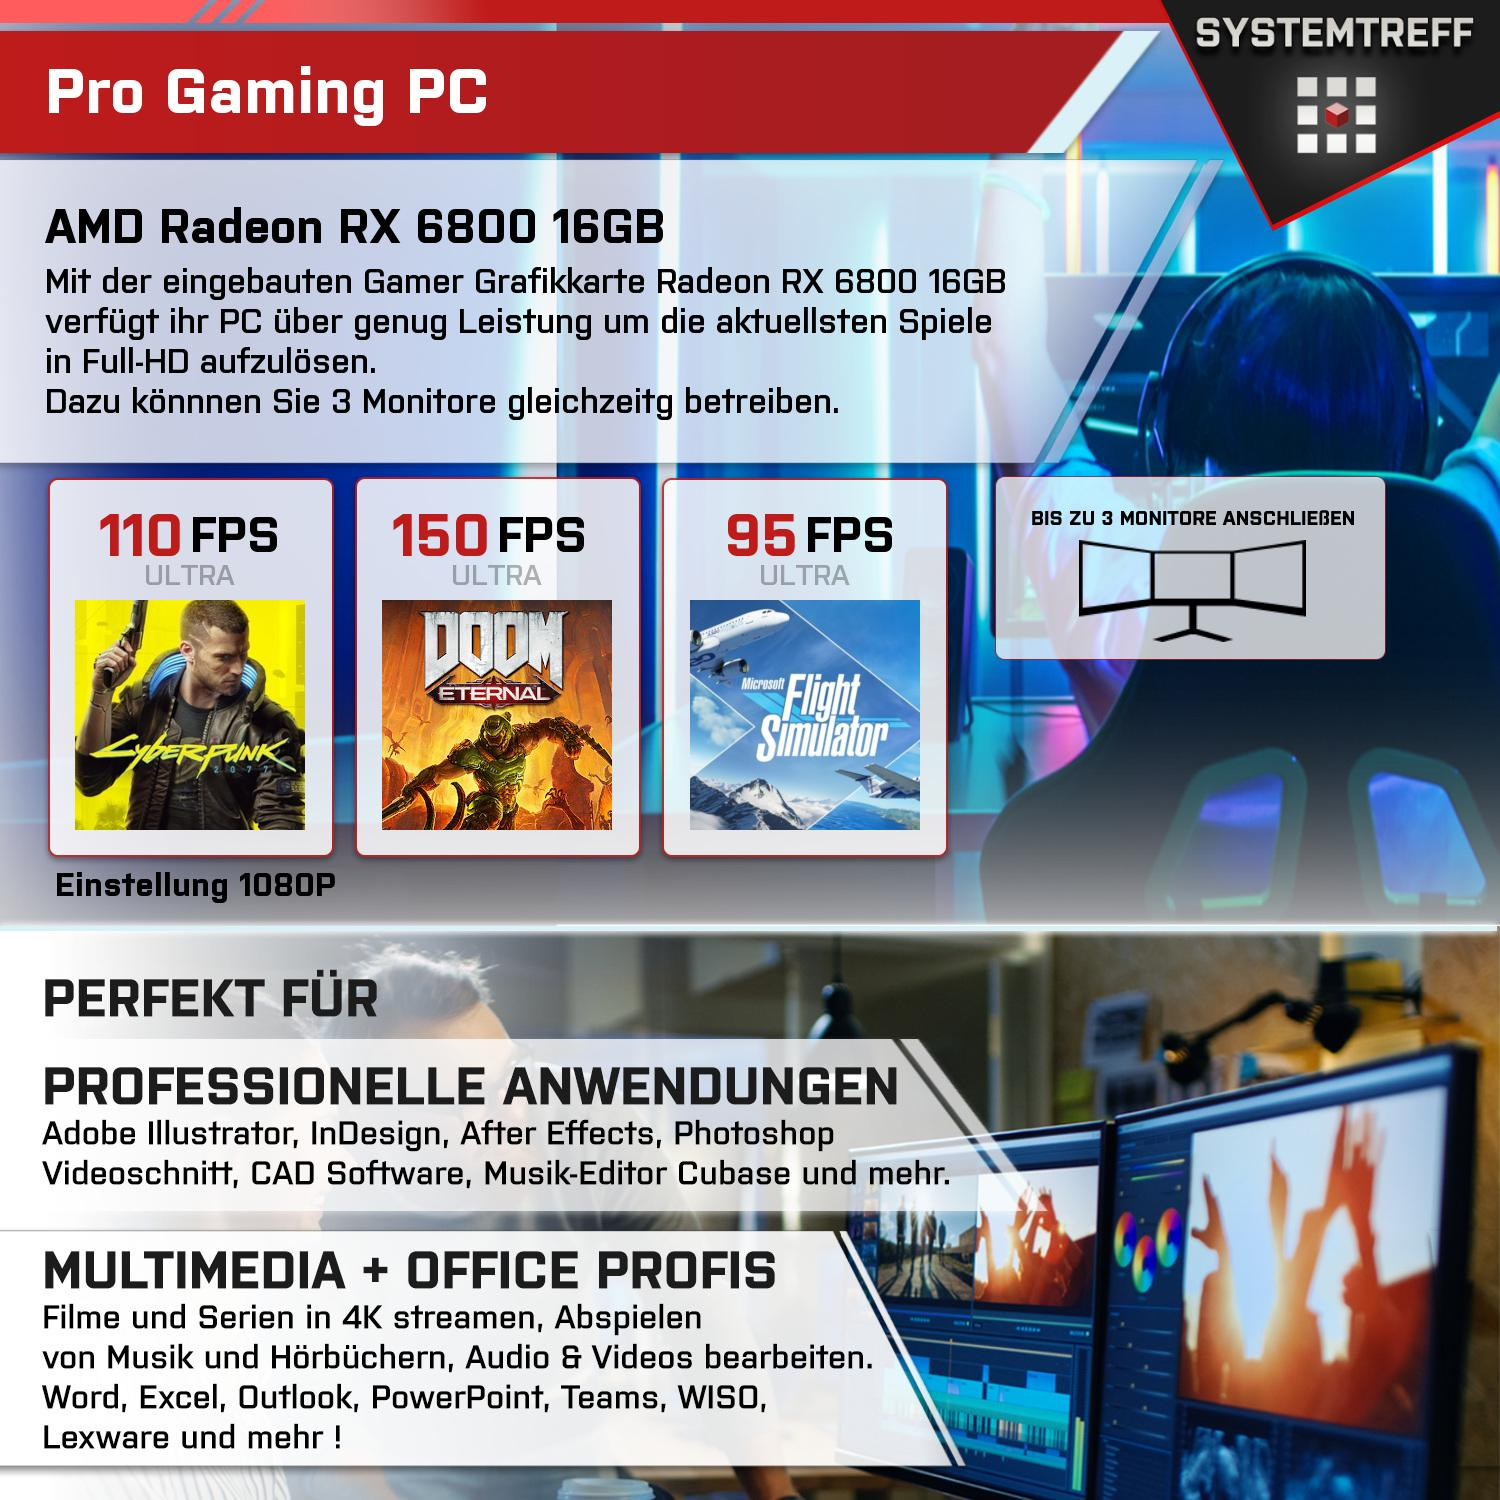 SYSTEMTREFF High-End Gaming AMD GB Windows GB AMD AMD Radeon™ PC 7700X, Prozessor, 6800 7 11 Ryzen RX mit 32 Ryzen™ Gaming RAM, Pro, mSSD, 7 1000